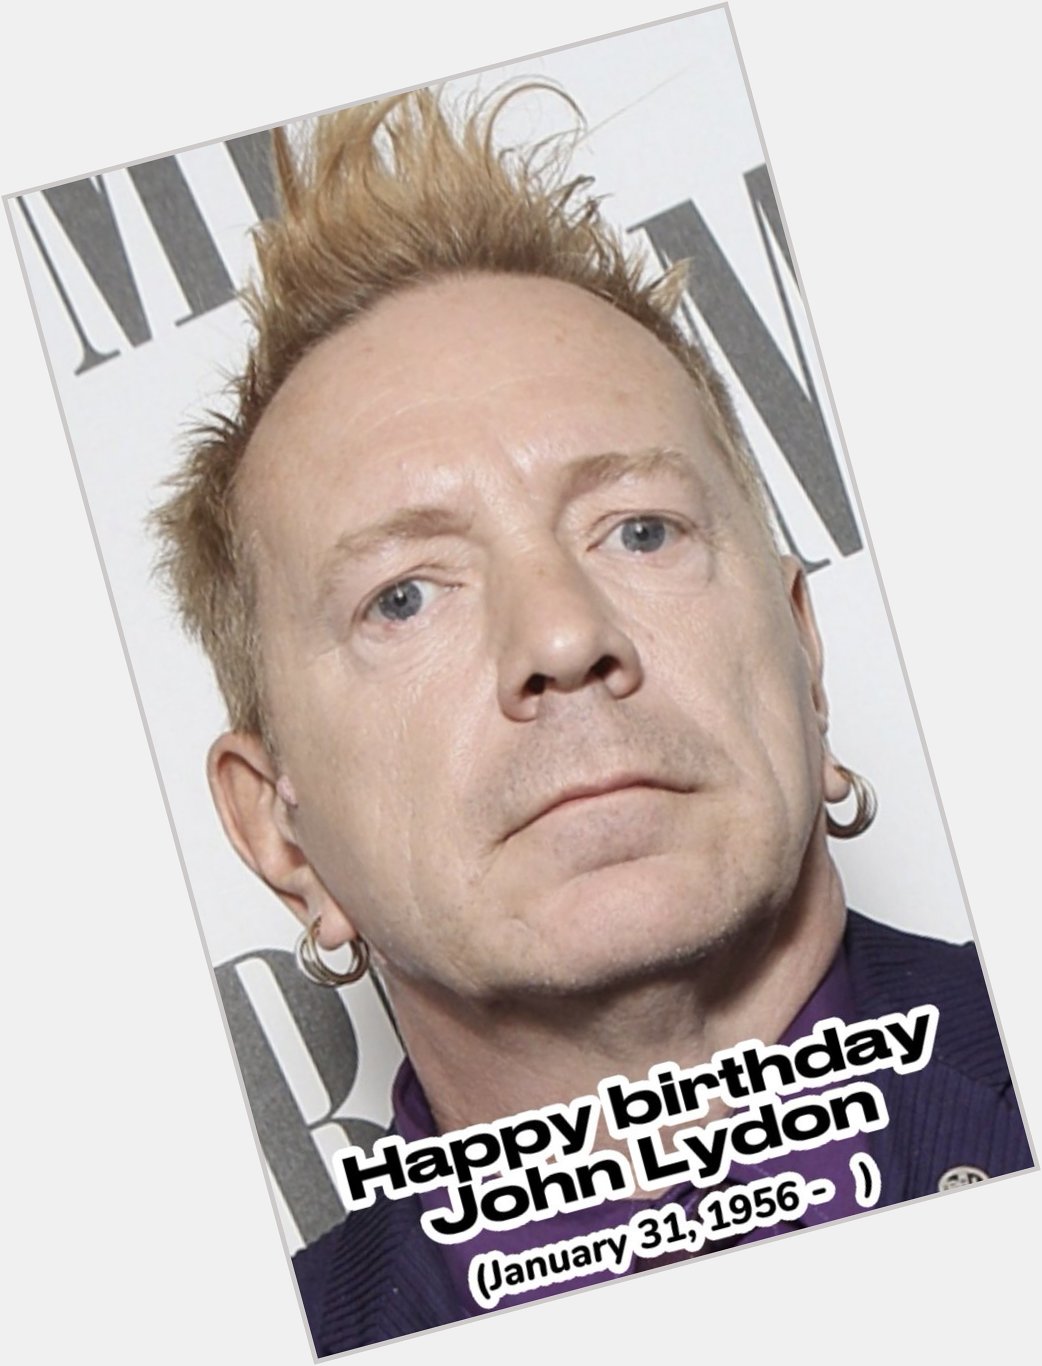 Happy birthday John Lydon (January 31, 1956 -)  Vocalists  